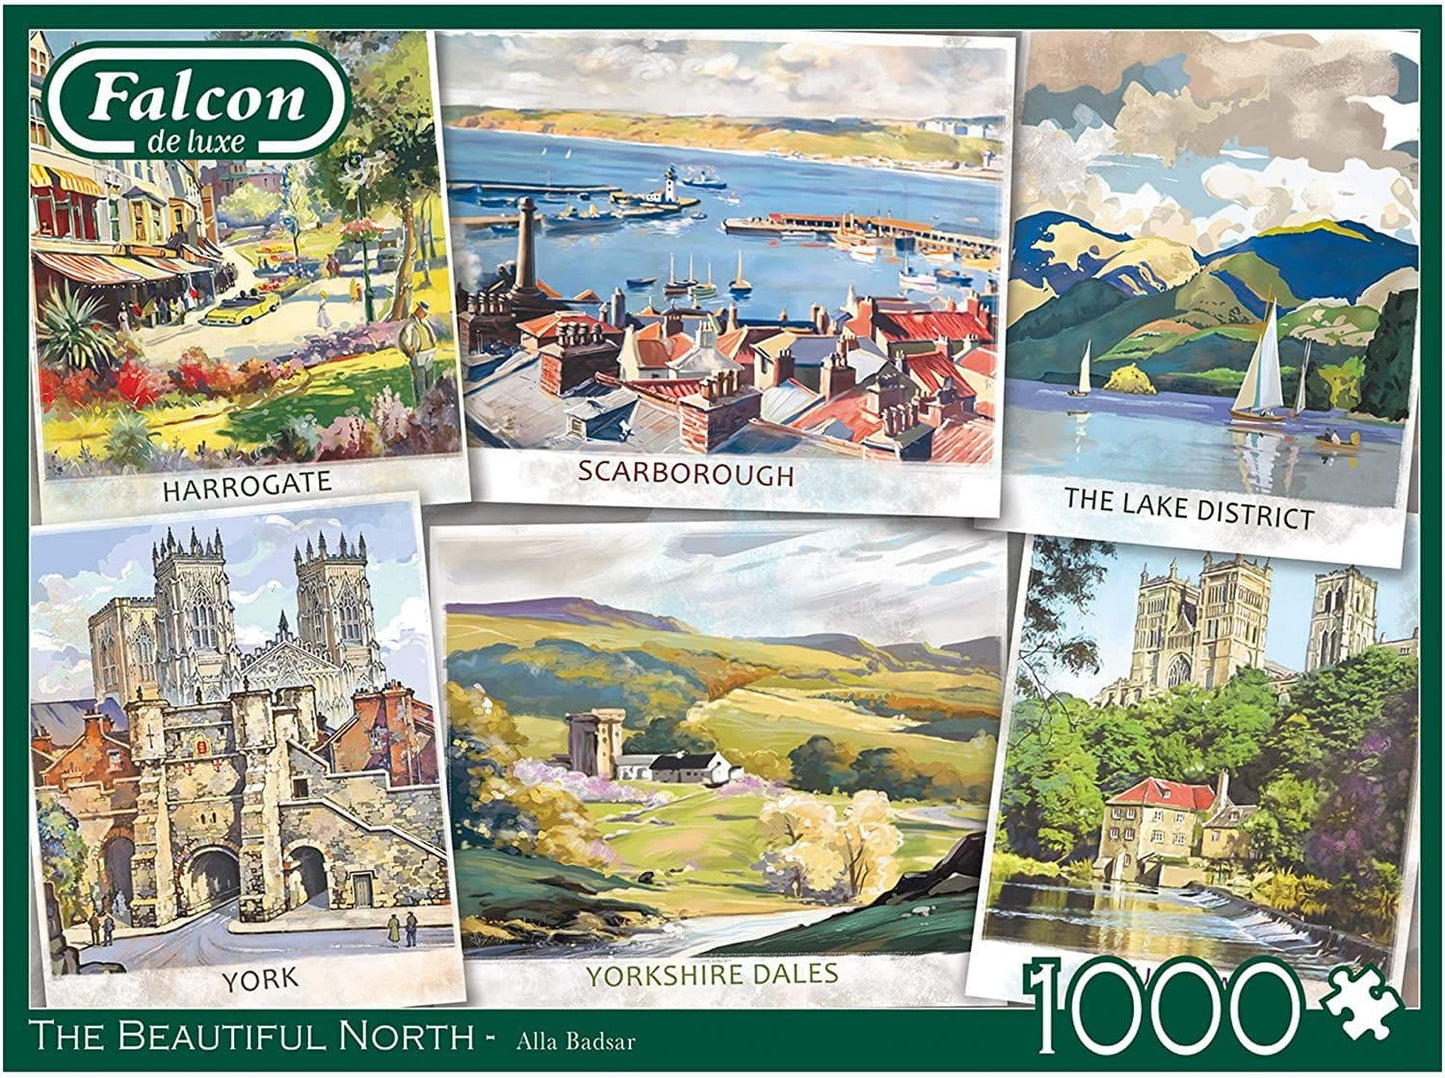 Falcon de luxe - The Beautiful North - 1000 Piece Jigsaw Puzzle